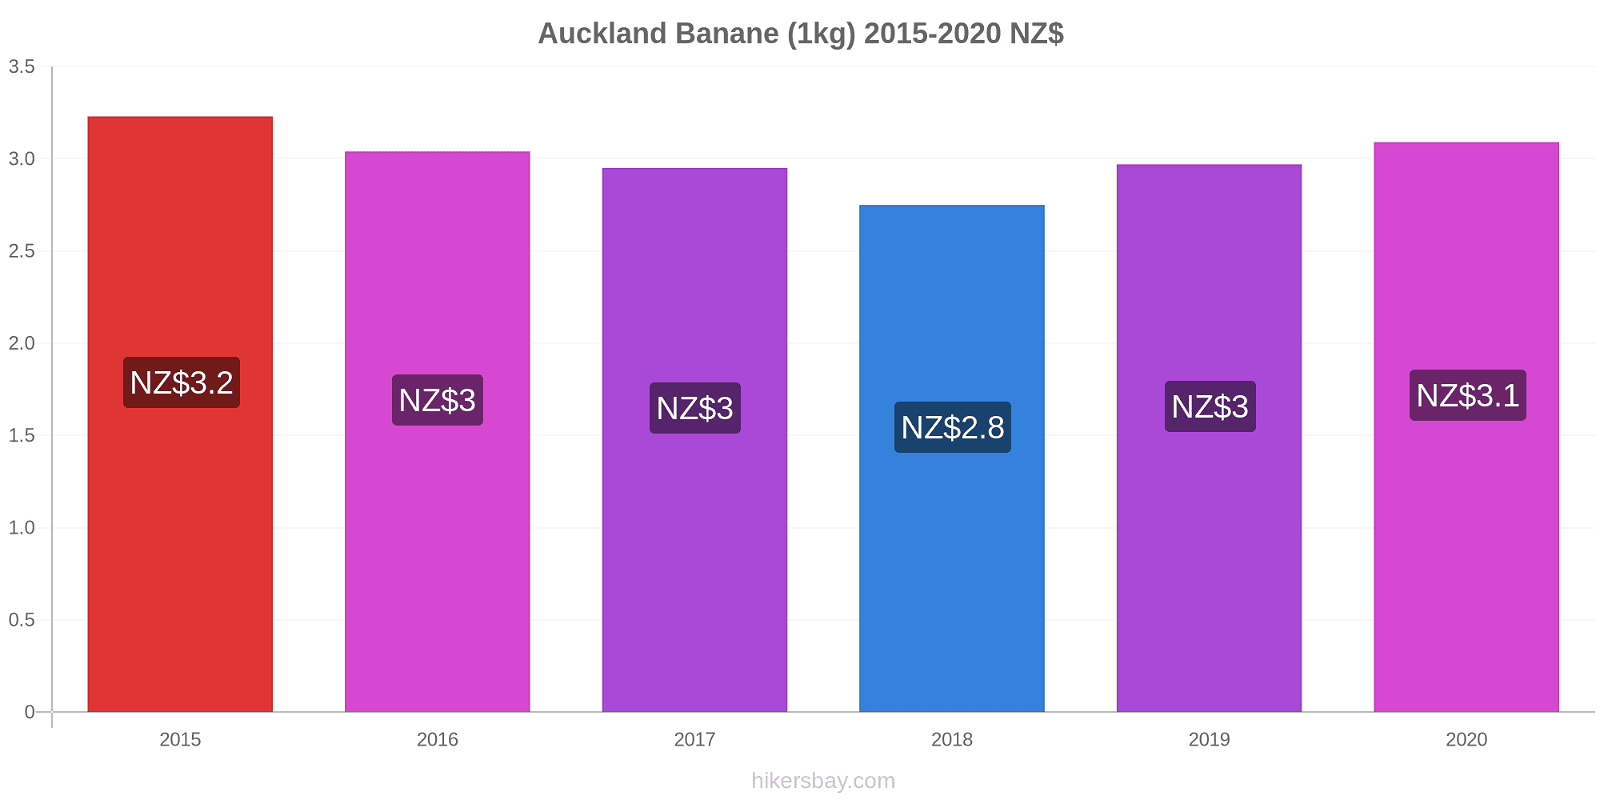 Auckland variazioni di prezzo Banana (1kg) hikersbay.com